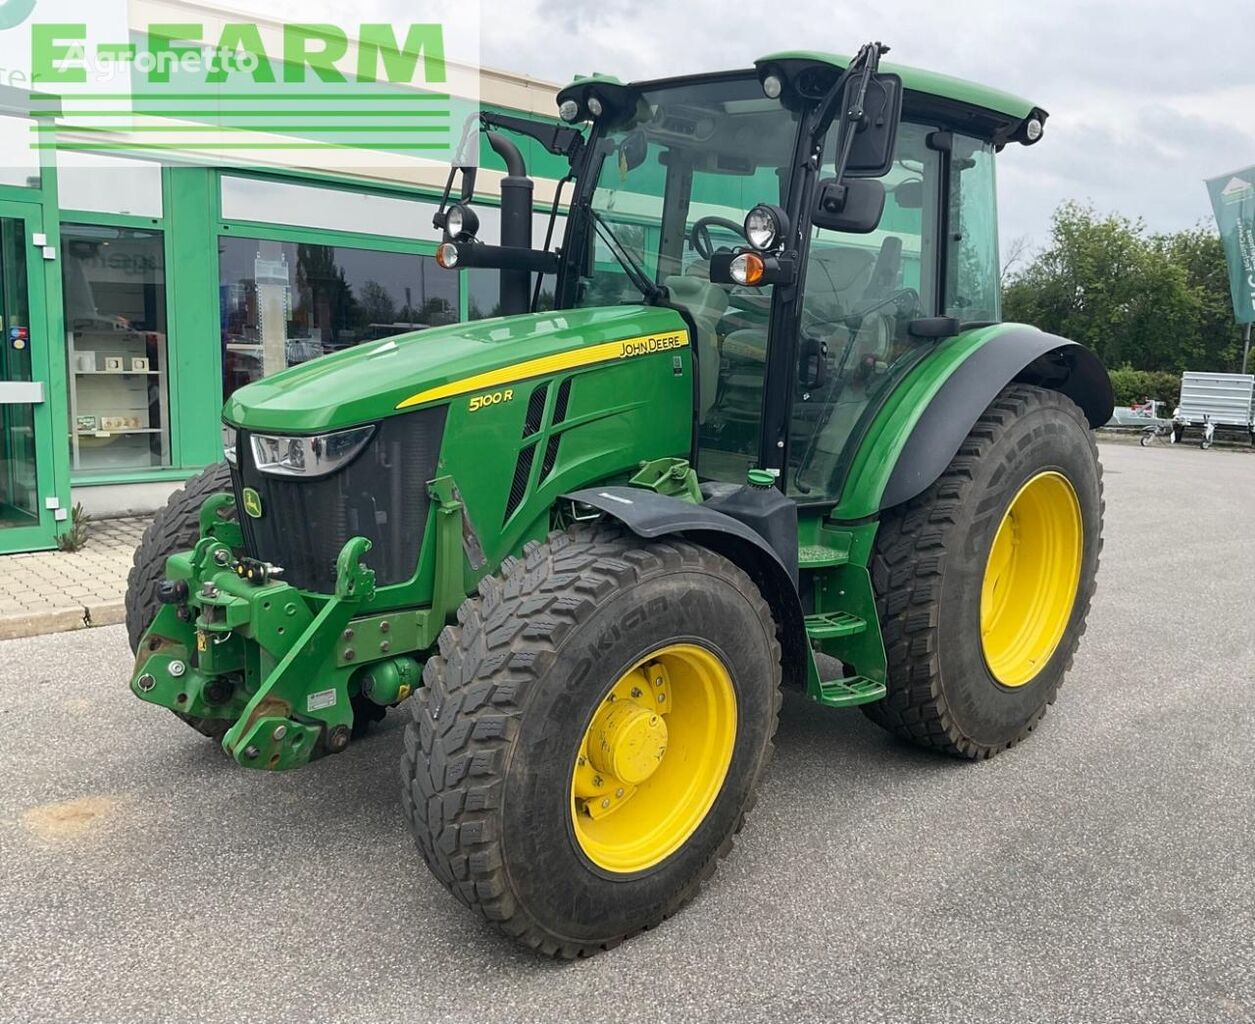 5100R wheel tractor